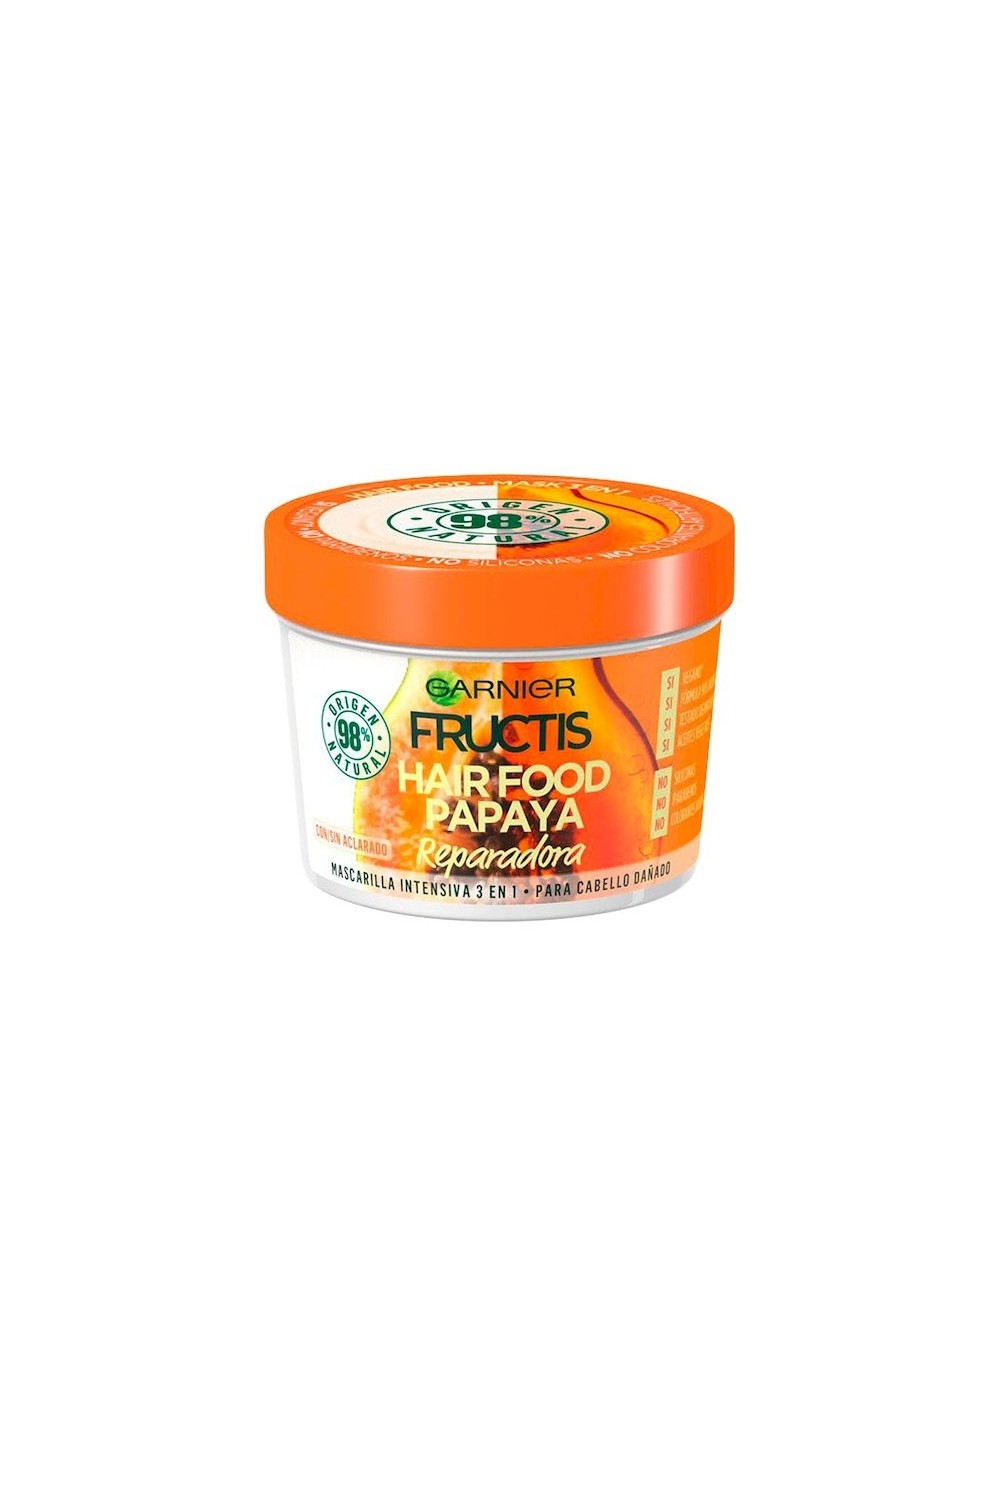 Garnier Fructis Hair Food Papaya Repair Mask 390ml